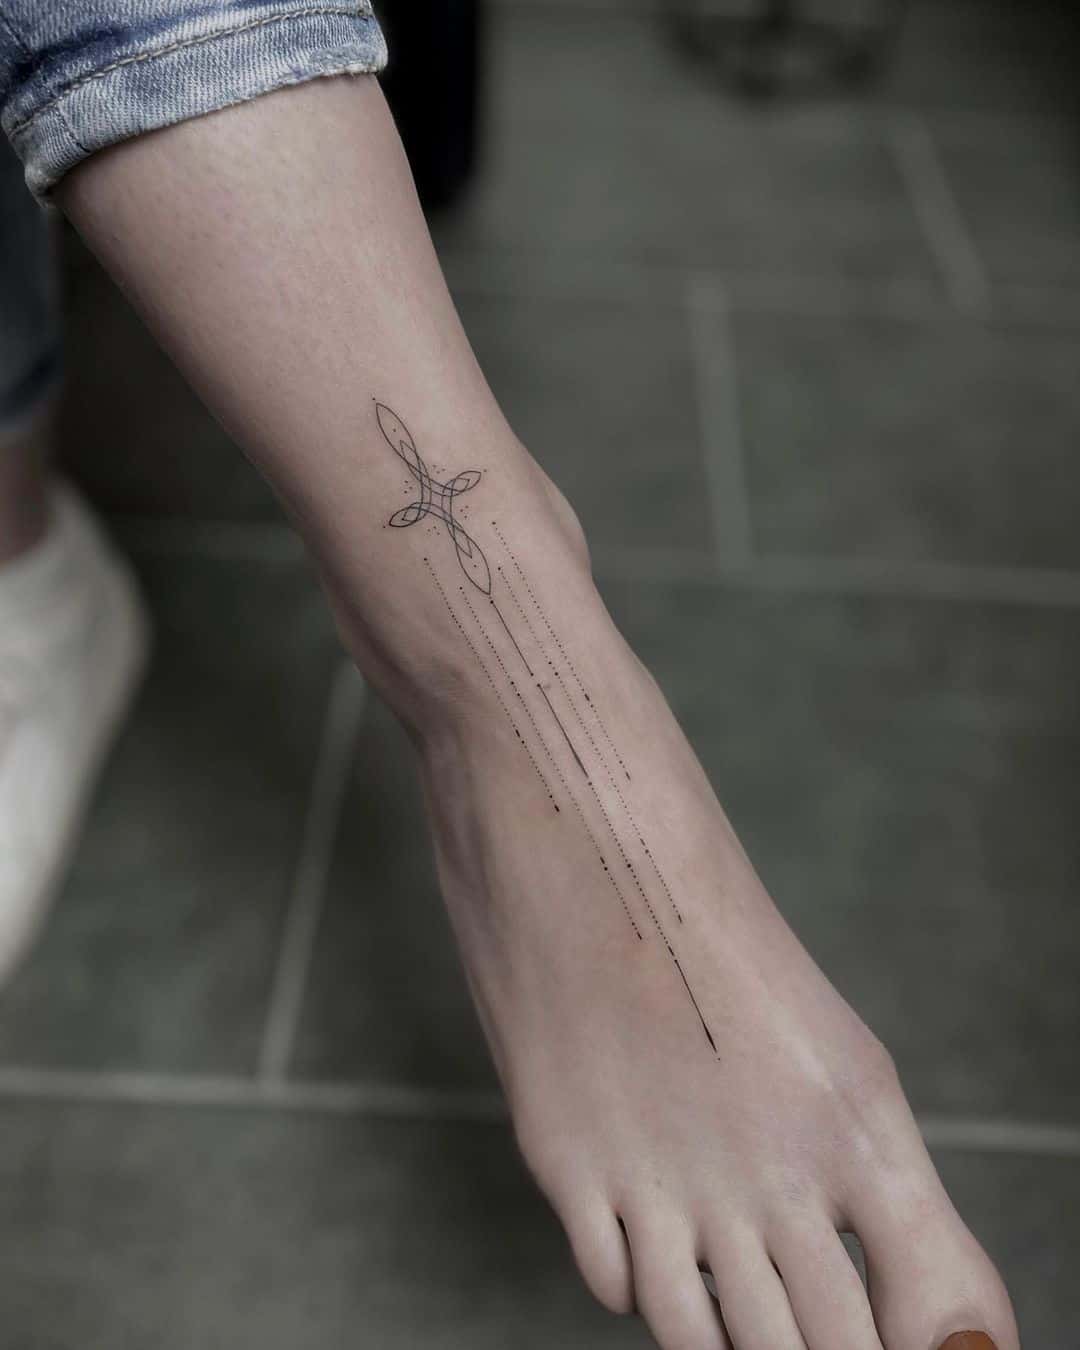 Fineline tattoo by rebitattoo